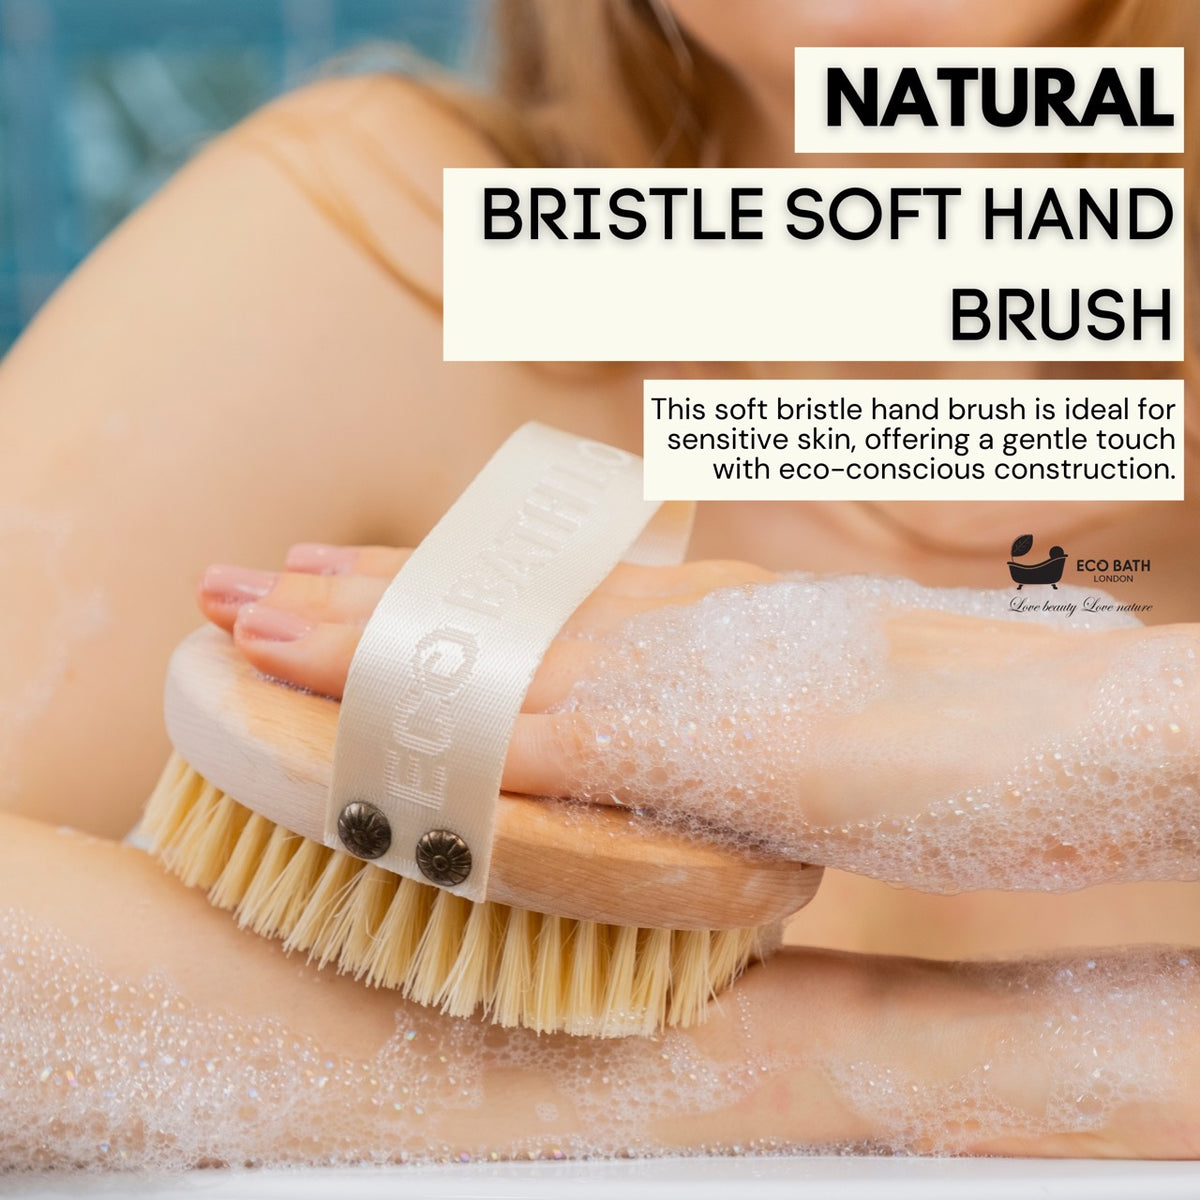 Eco Bath Natural Bristle Soft Hand Brush